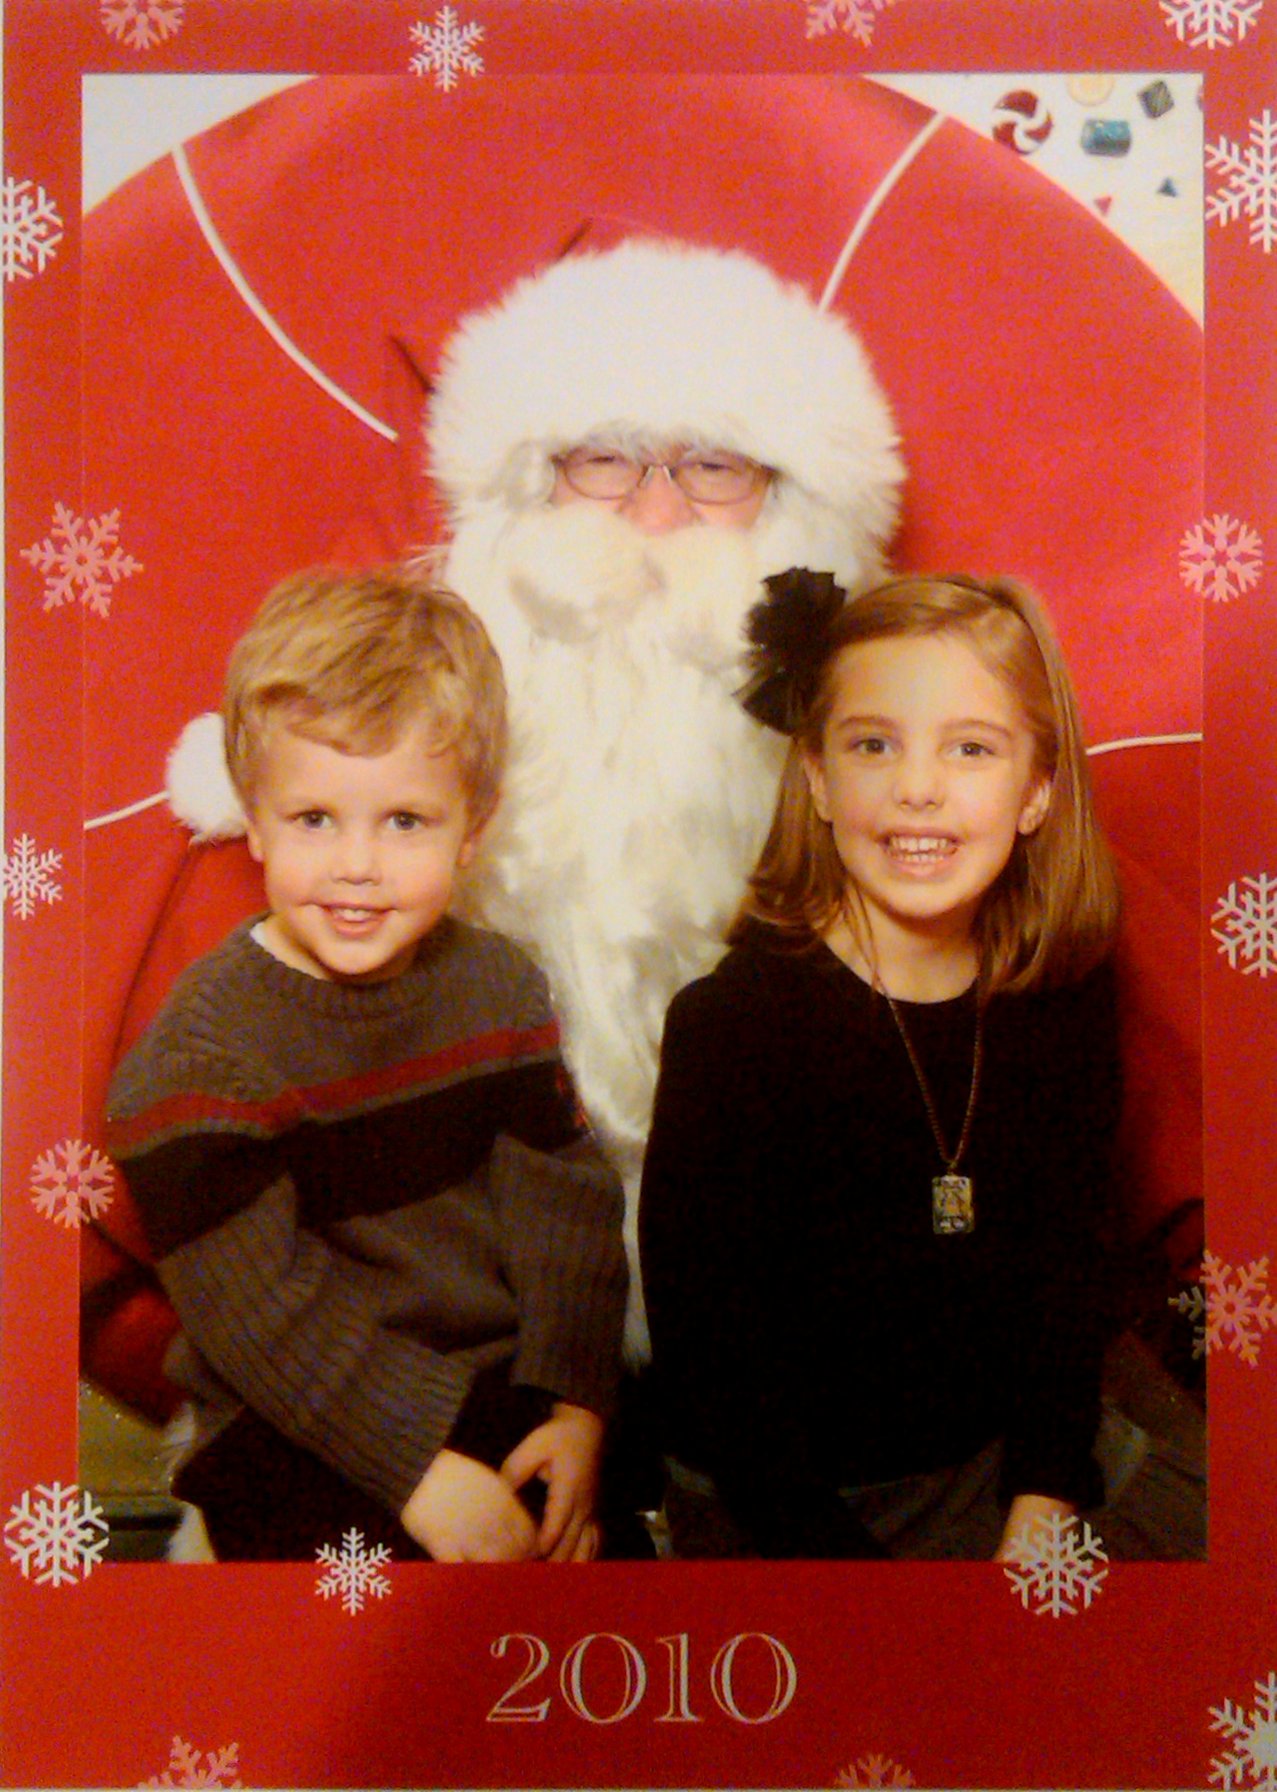 kids with Santa